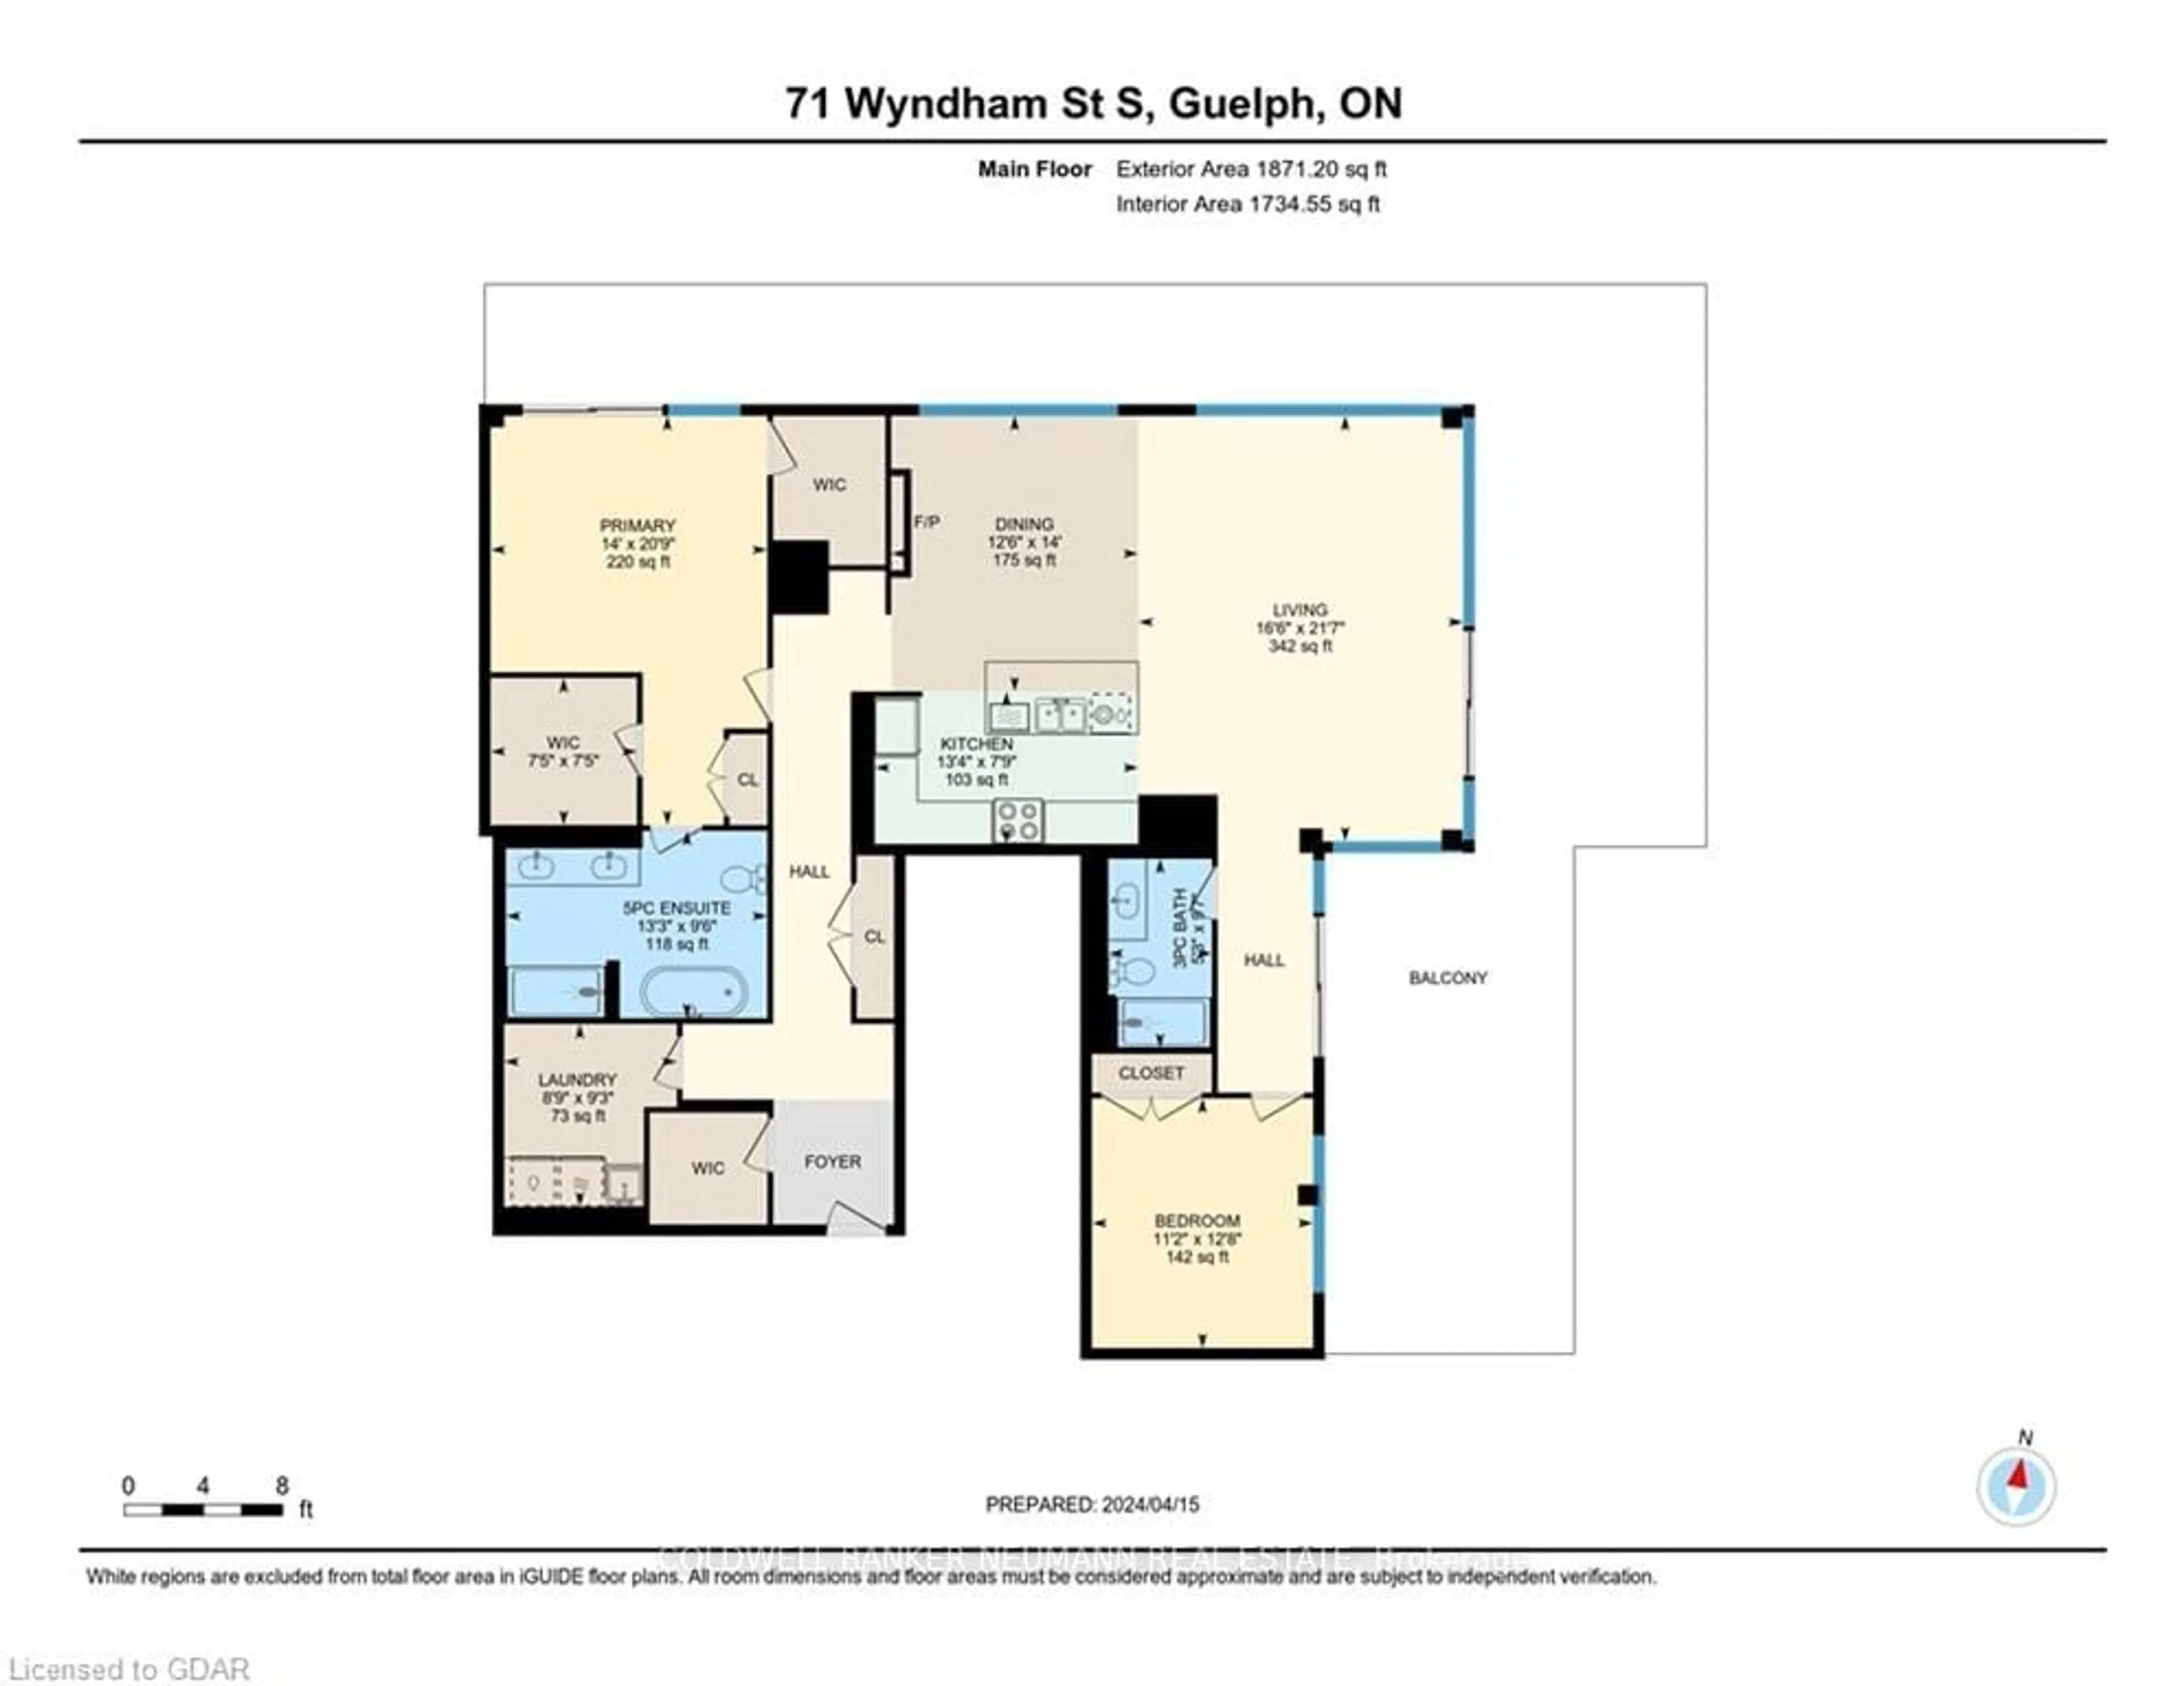 Floor plan for 71 Wyndham St #1302, Guelph Ontario N1E 0T7